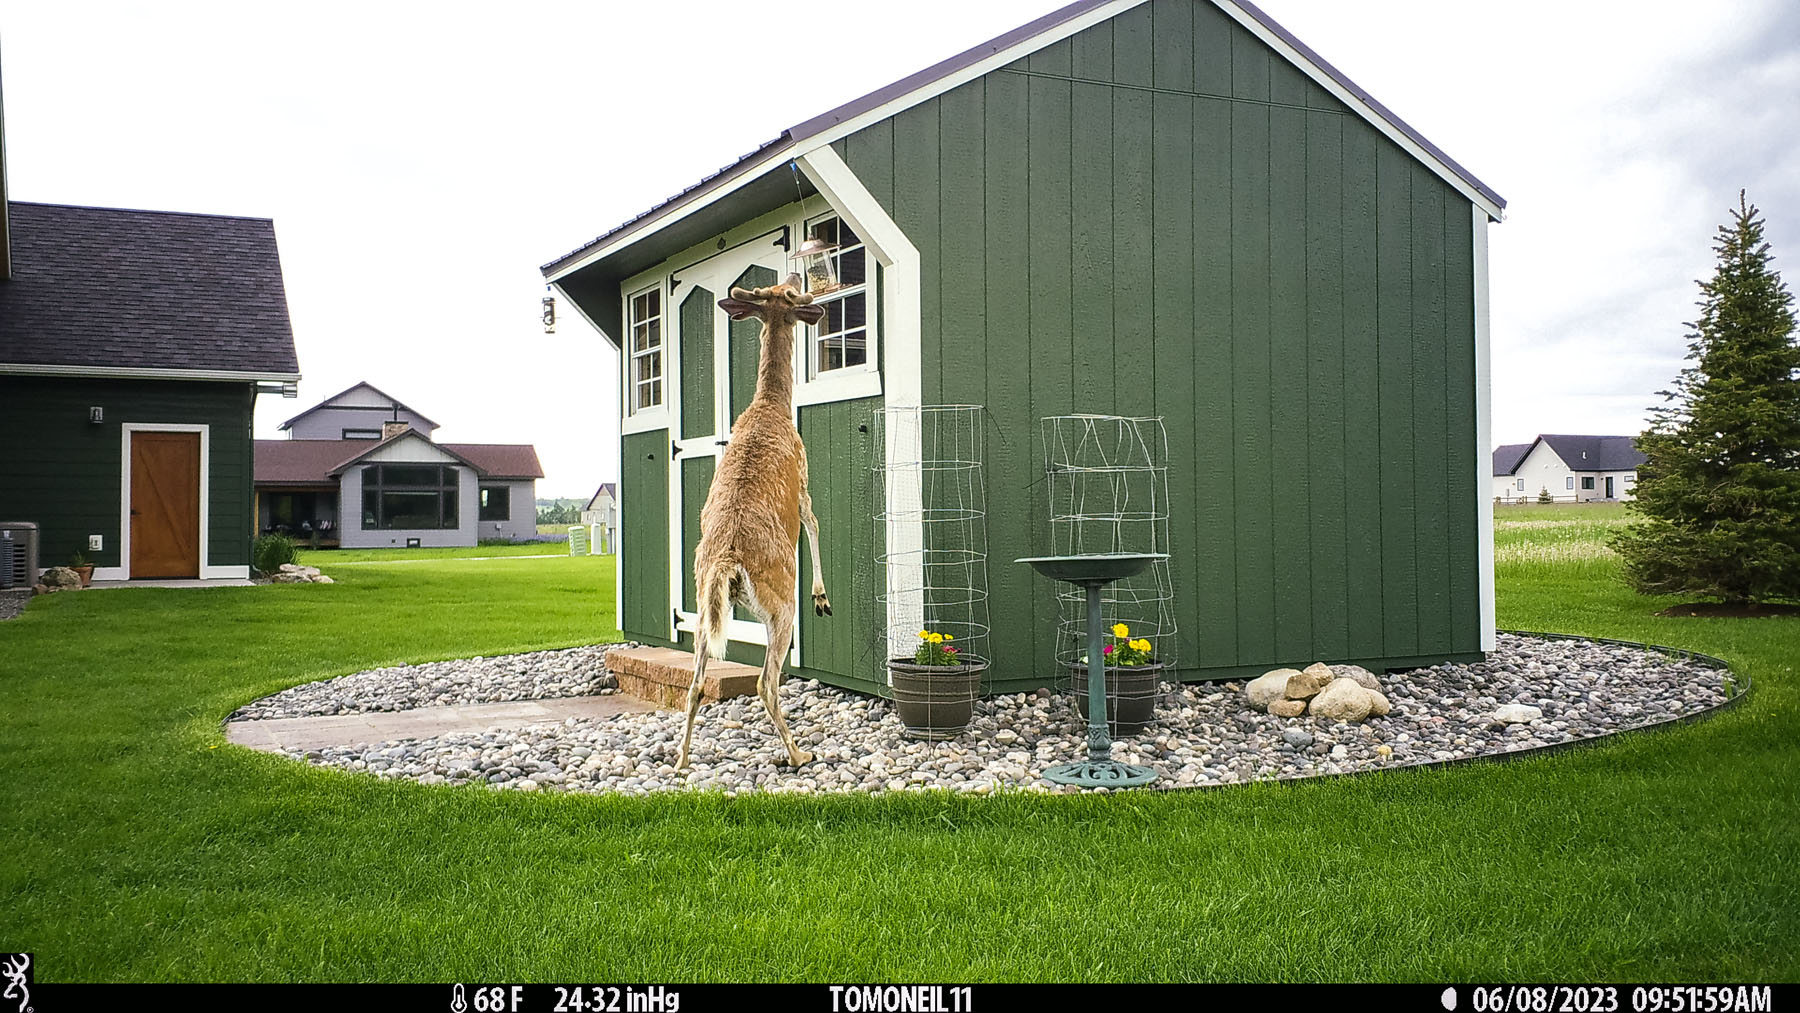 Deer raids the bird feeder.  Click for next photo.